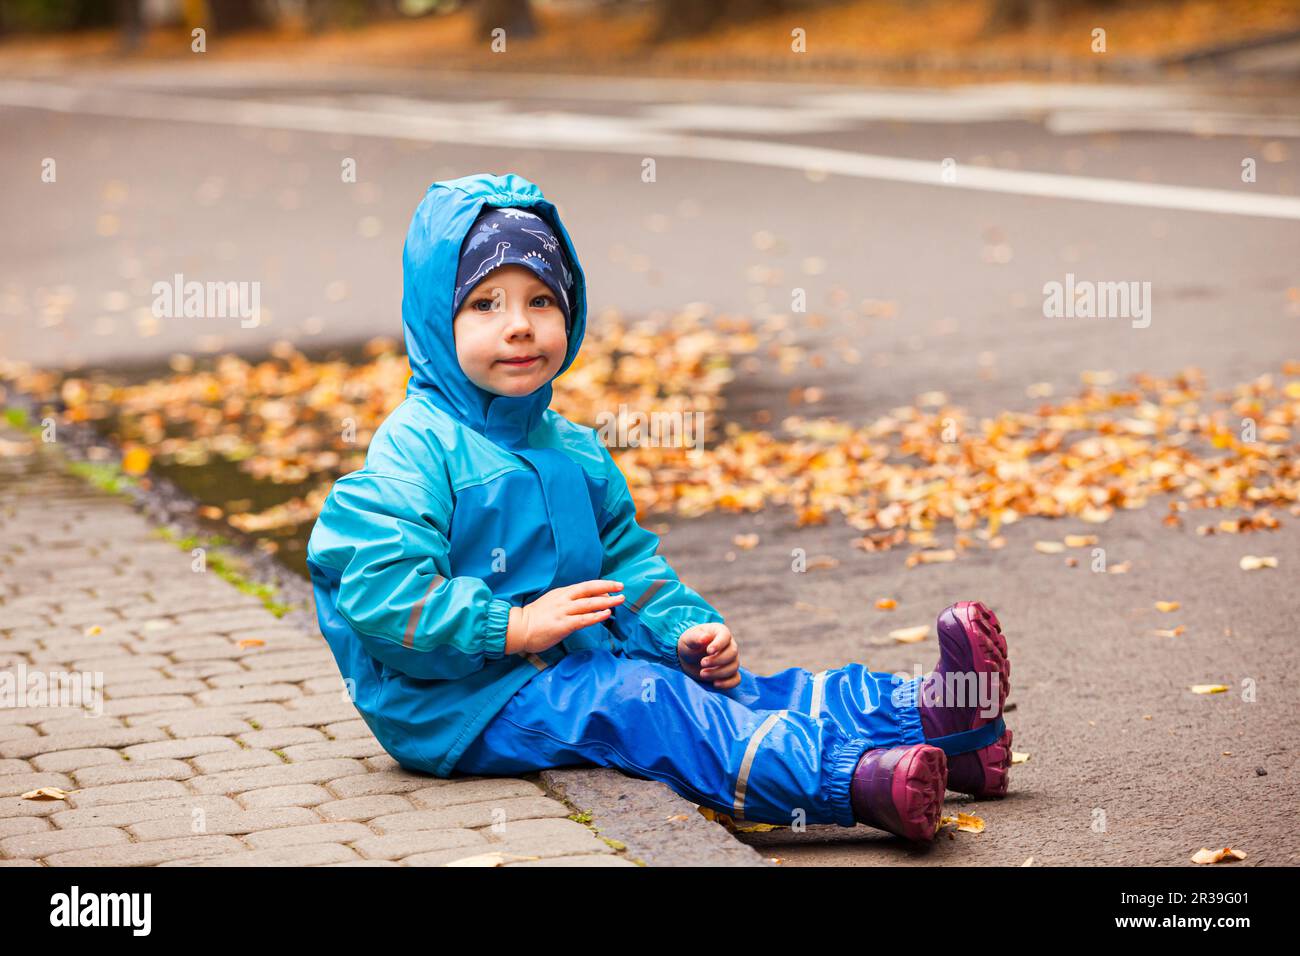 Happy child in waterproof coat and rainboots outdoors in autumn season. Stock Photo